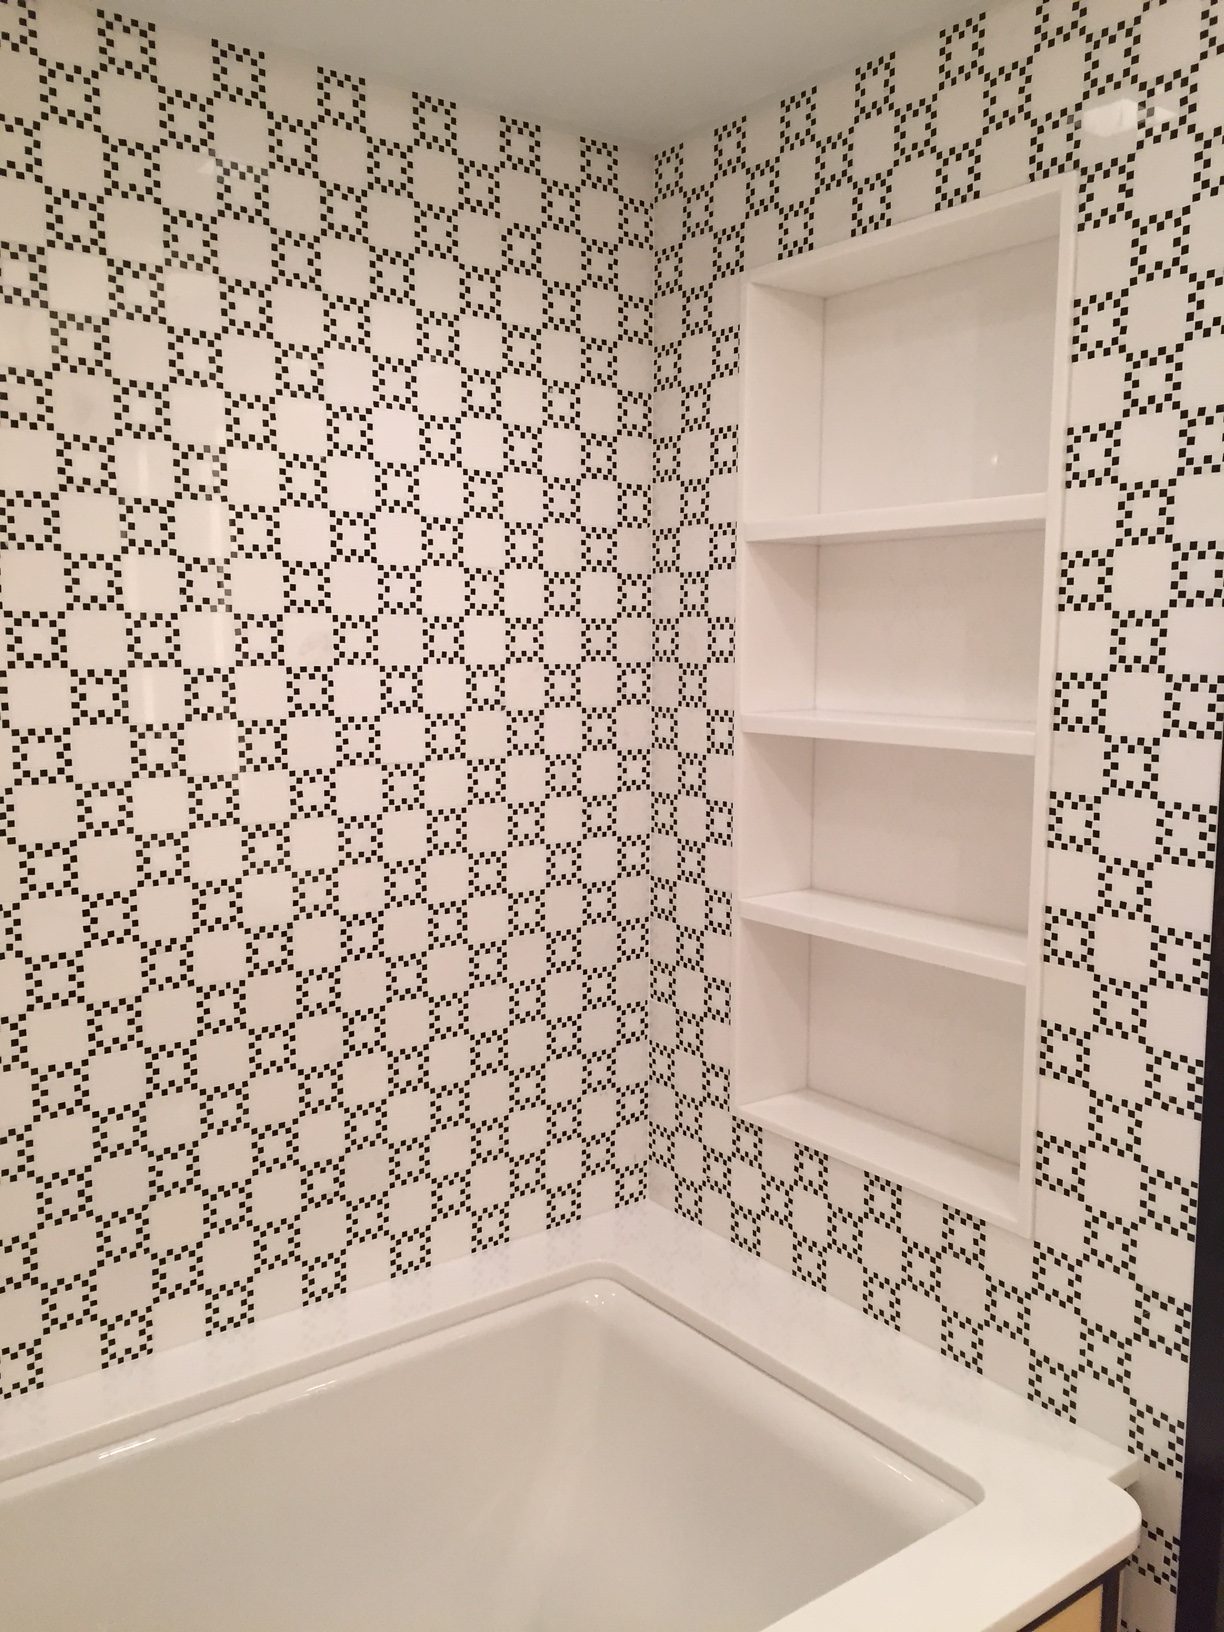 Master bathroom with custom belgium black and white thassos checkerboard mosaic